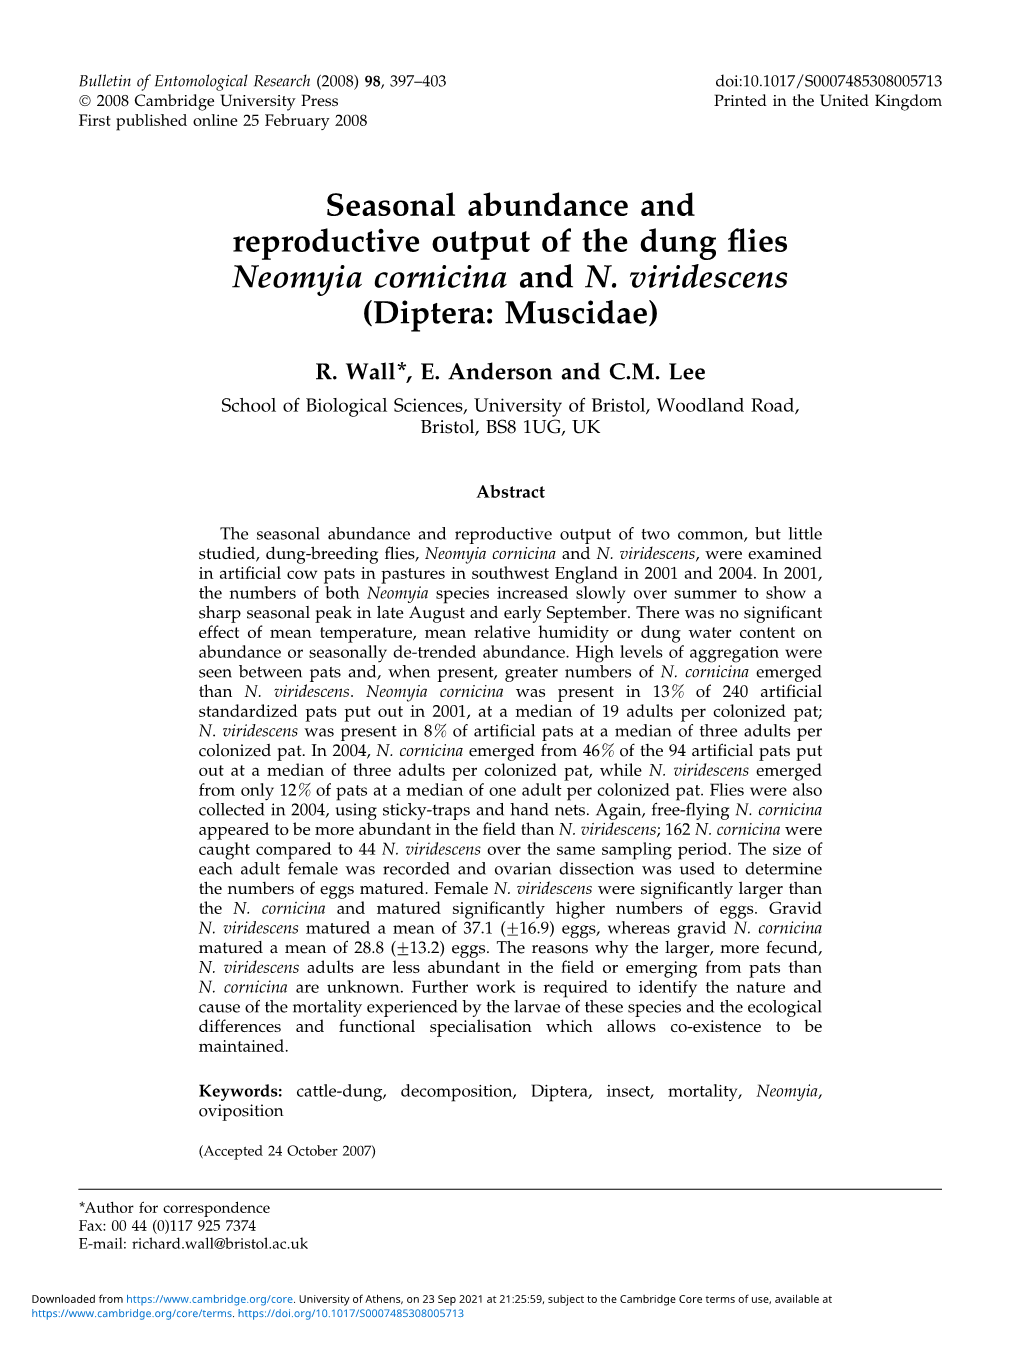 Seasonal Abundance and Reproductive Output of the Dung Flies